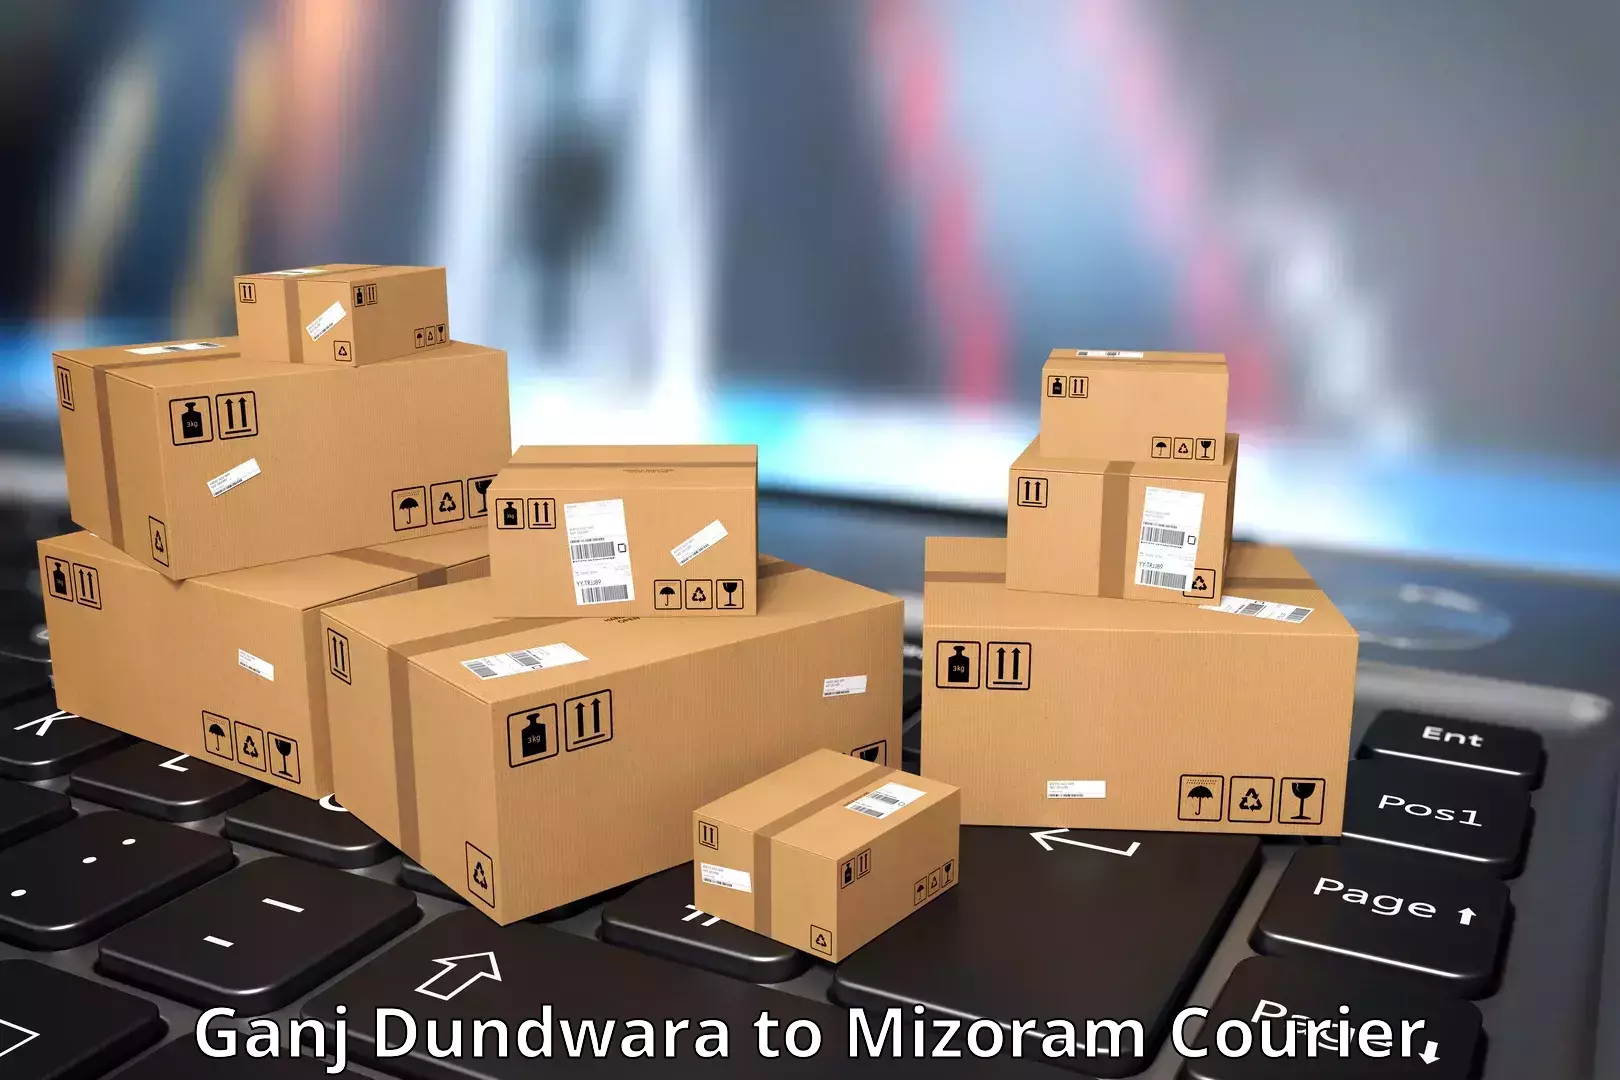 Courier service innovation Ganj Dundwara to Aizawl